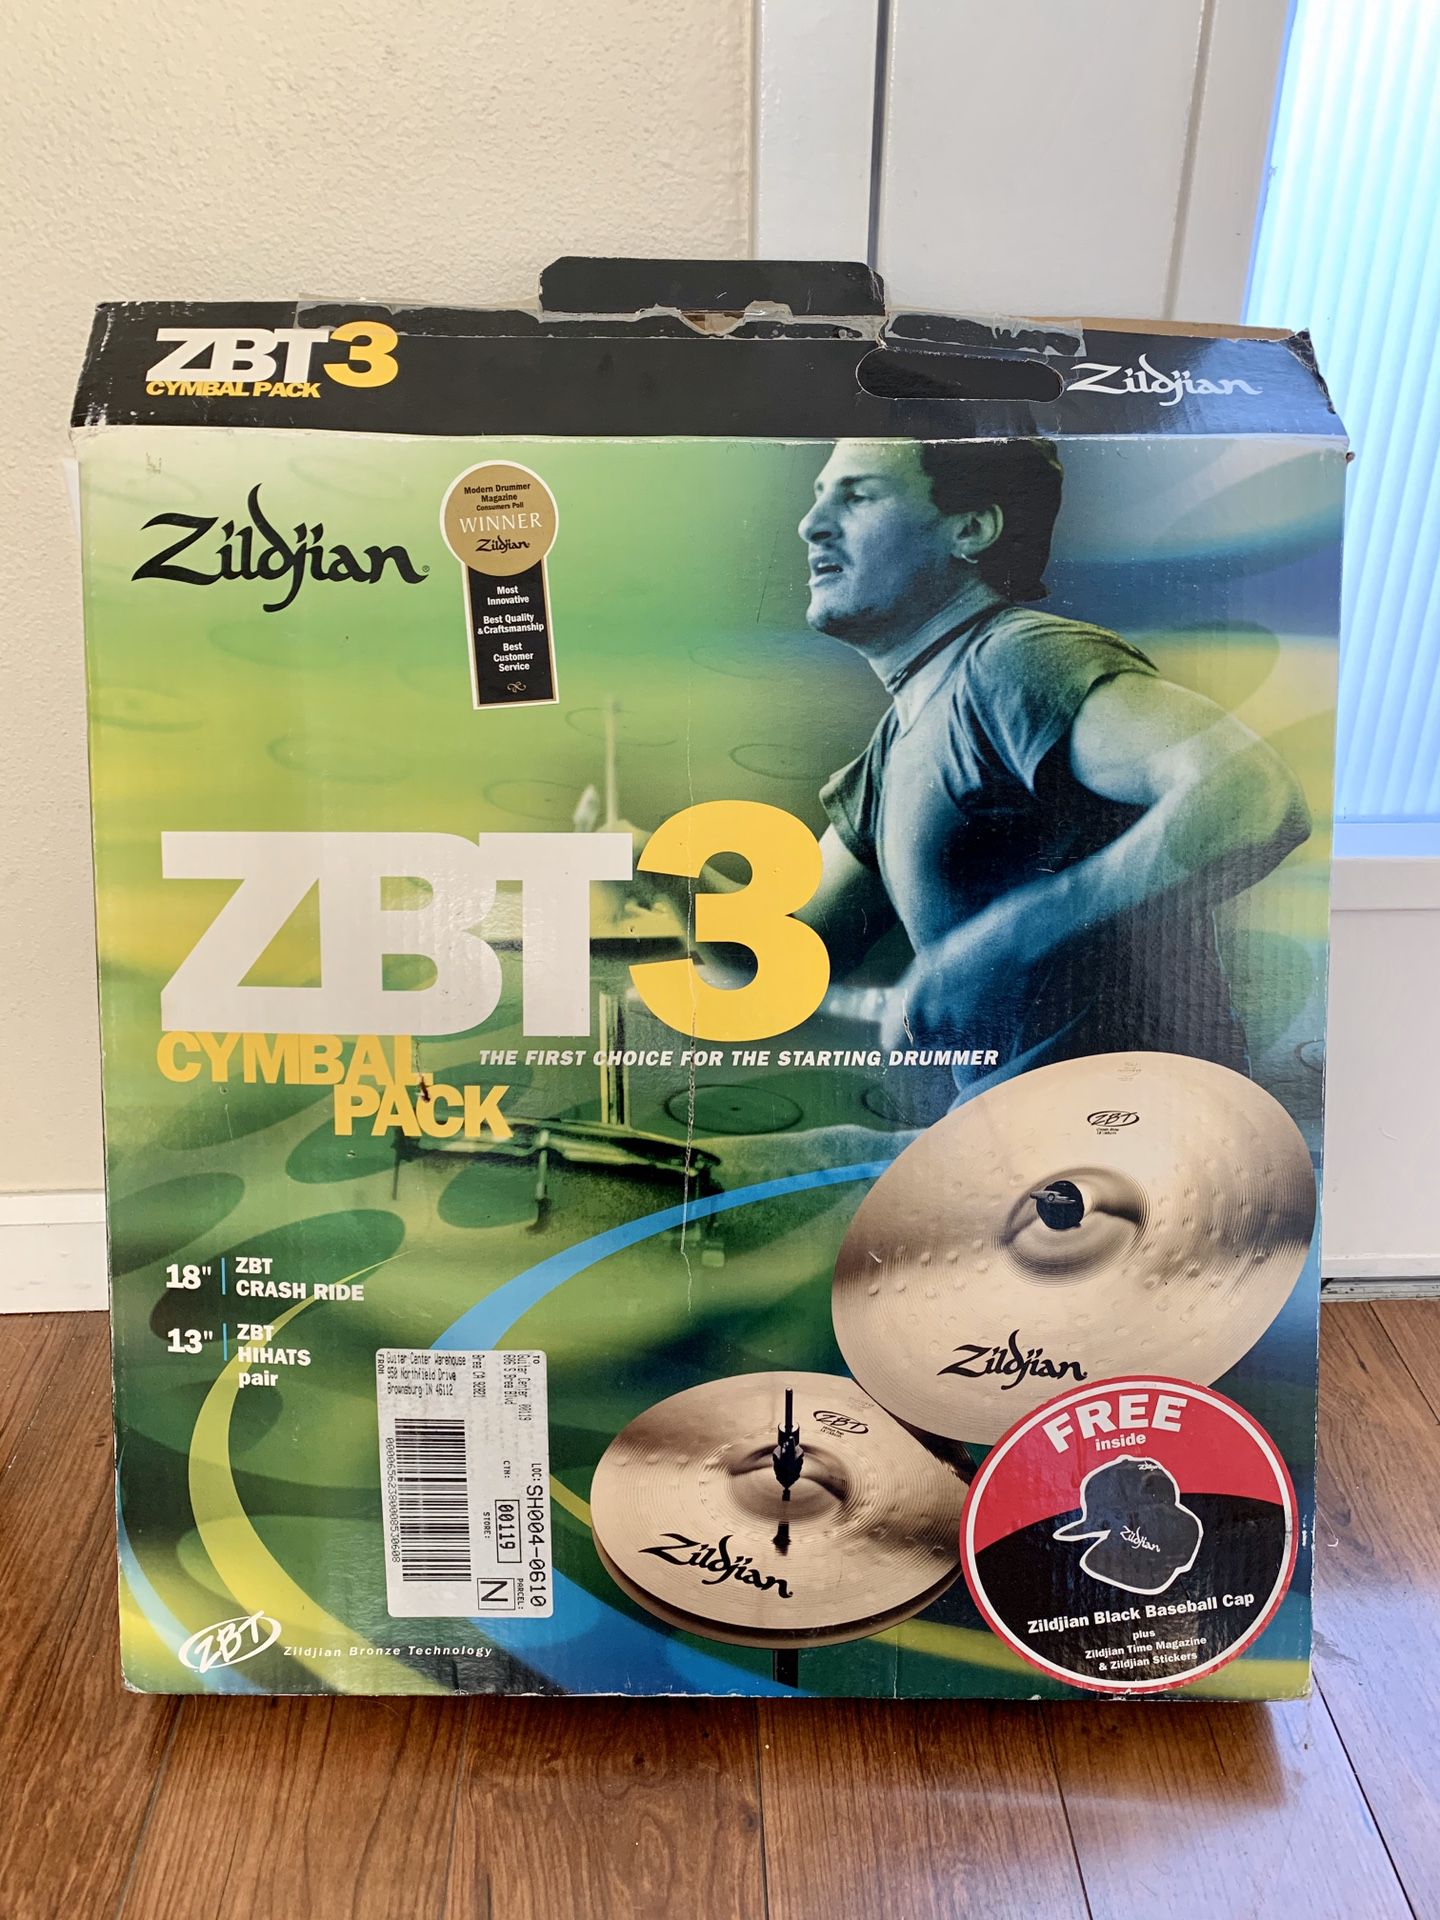 Zildjian Cymbal 3 Pack and original set